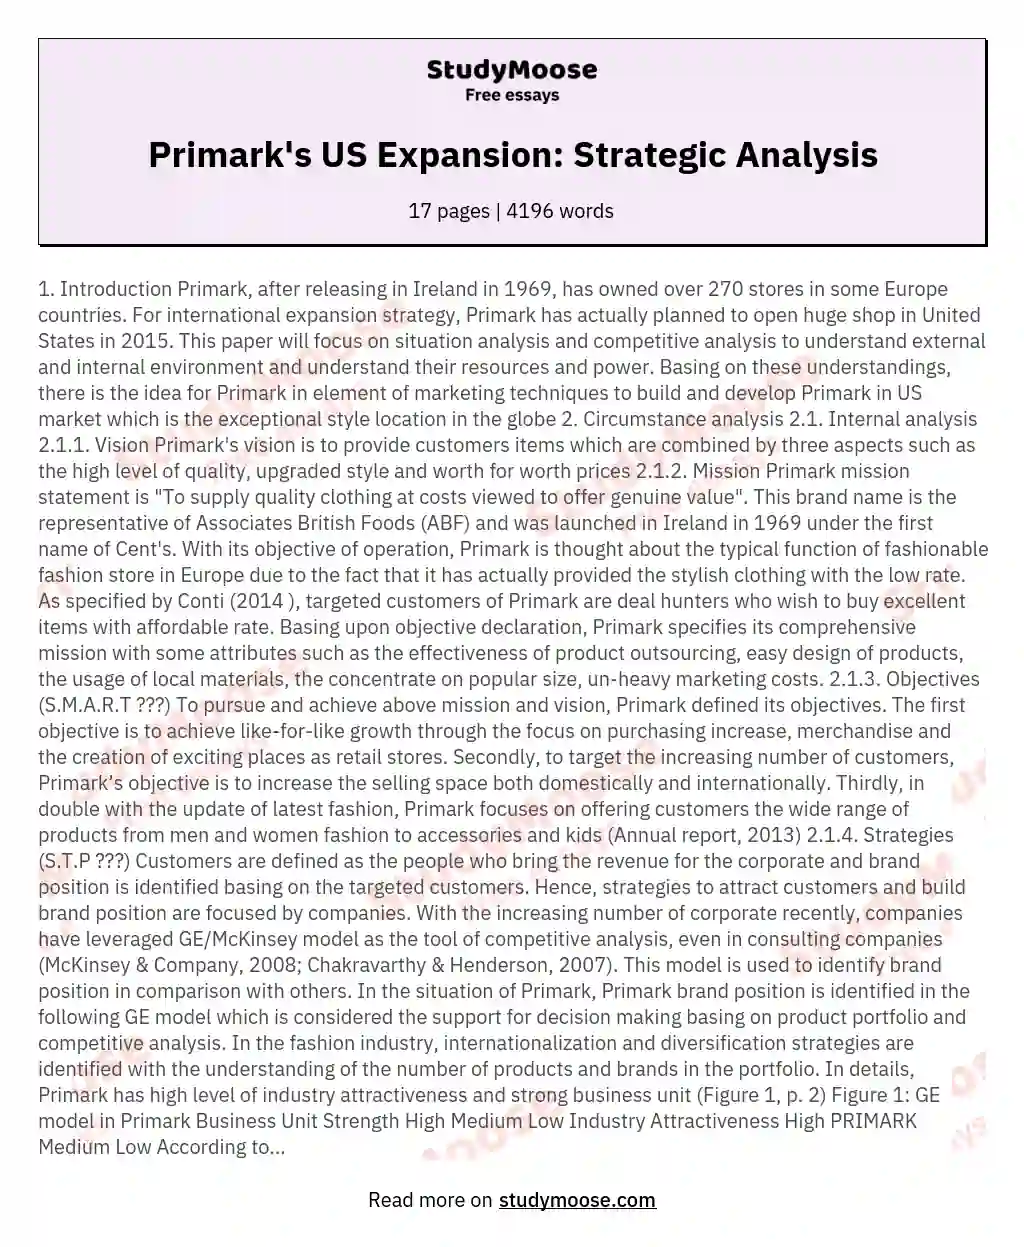 Primark's US Expansion: Strategic Analysis essay